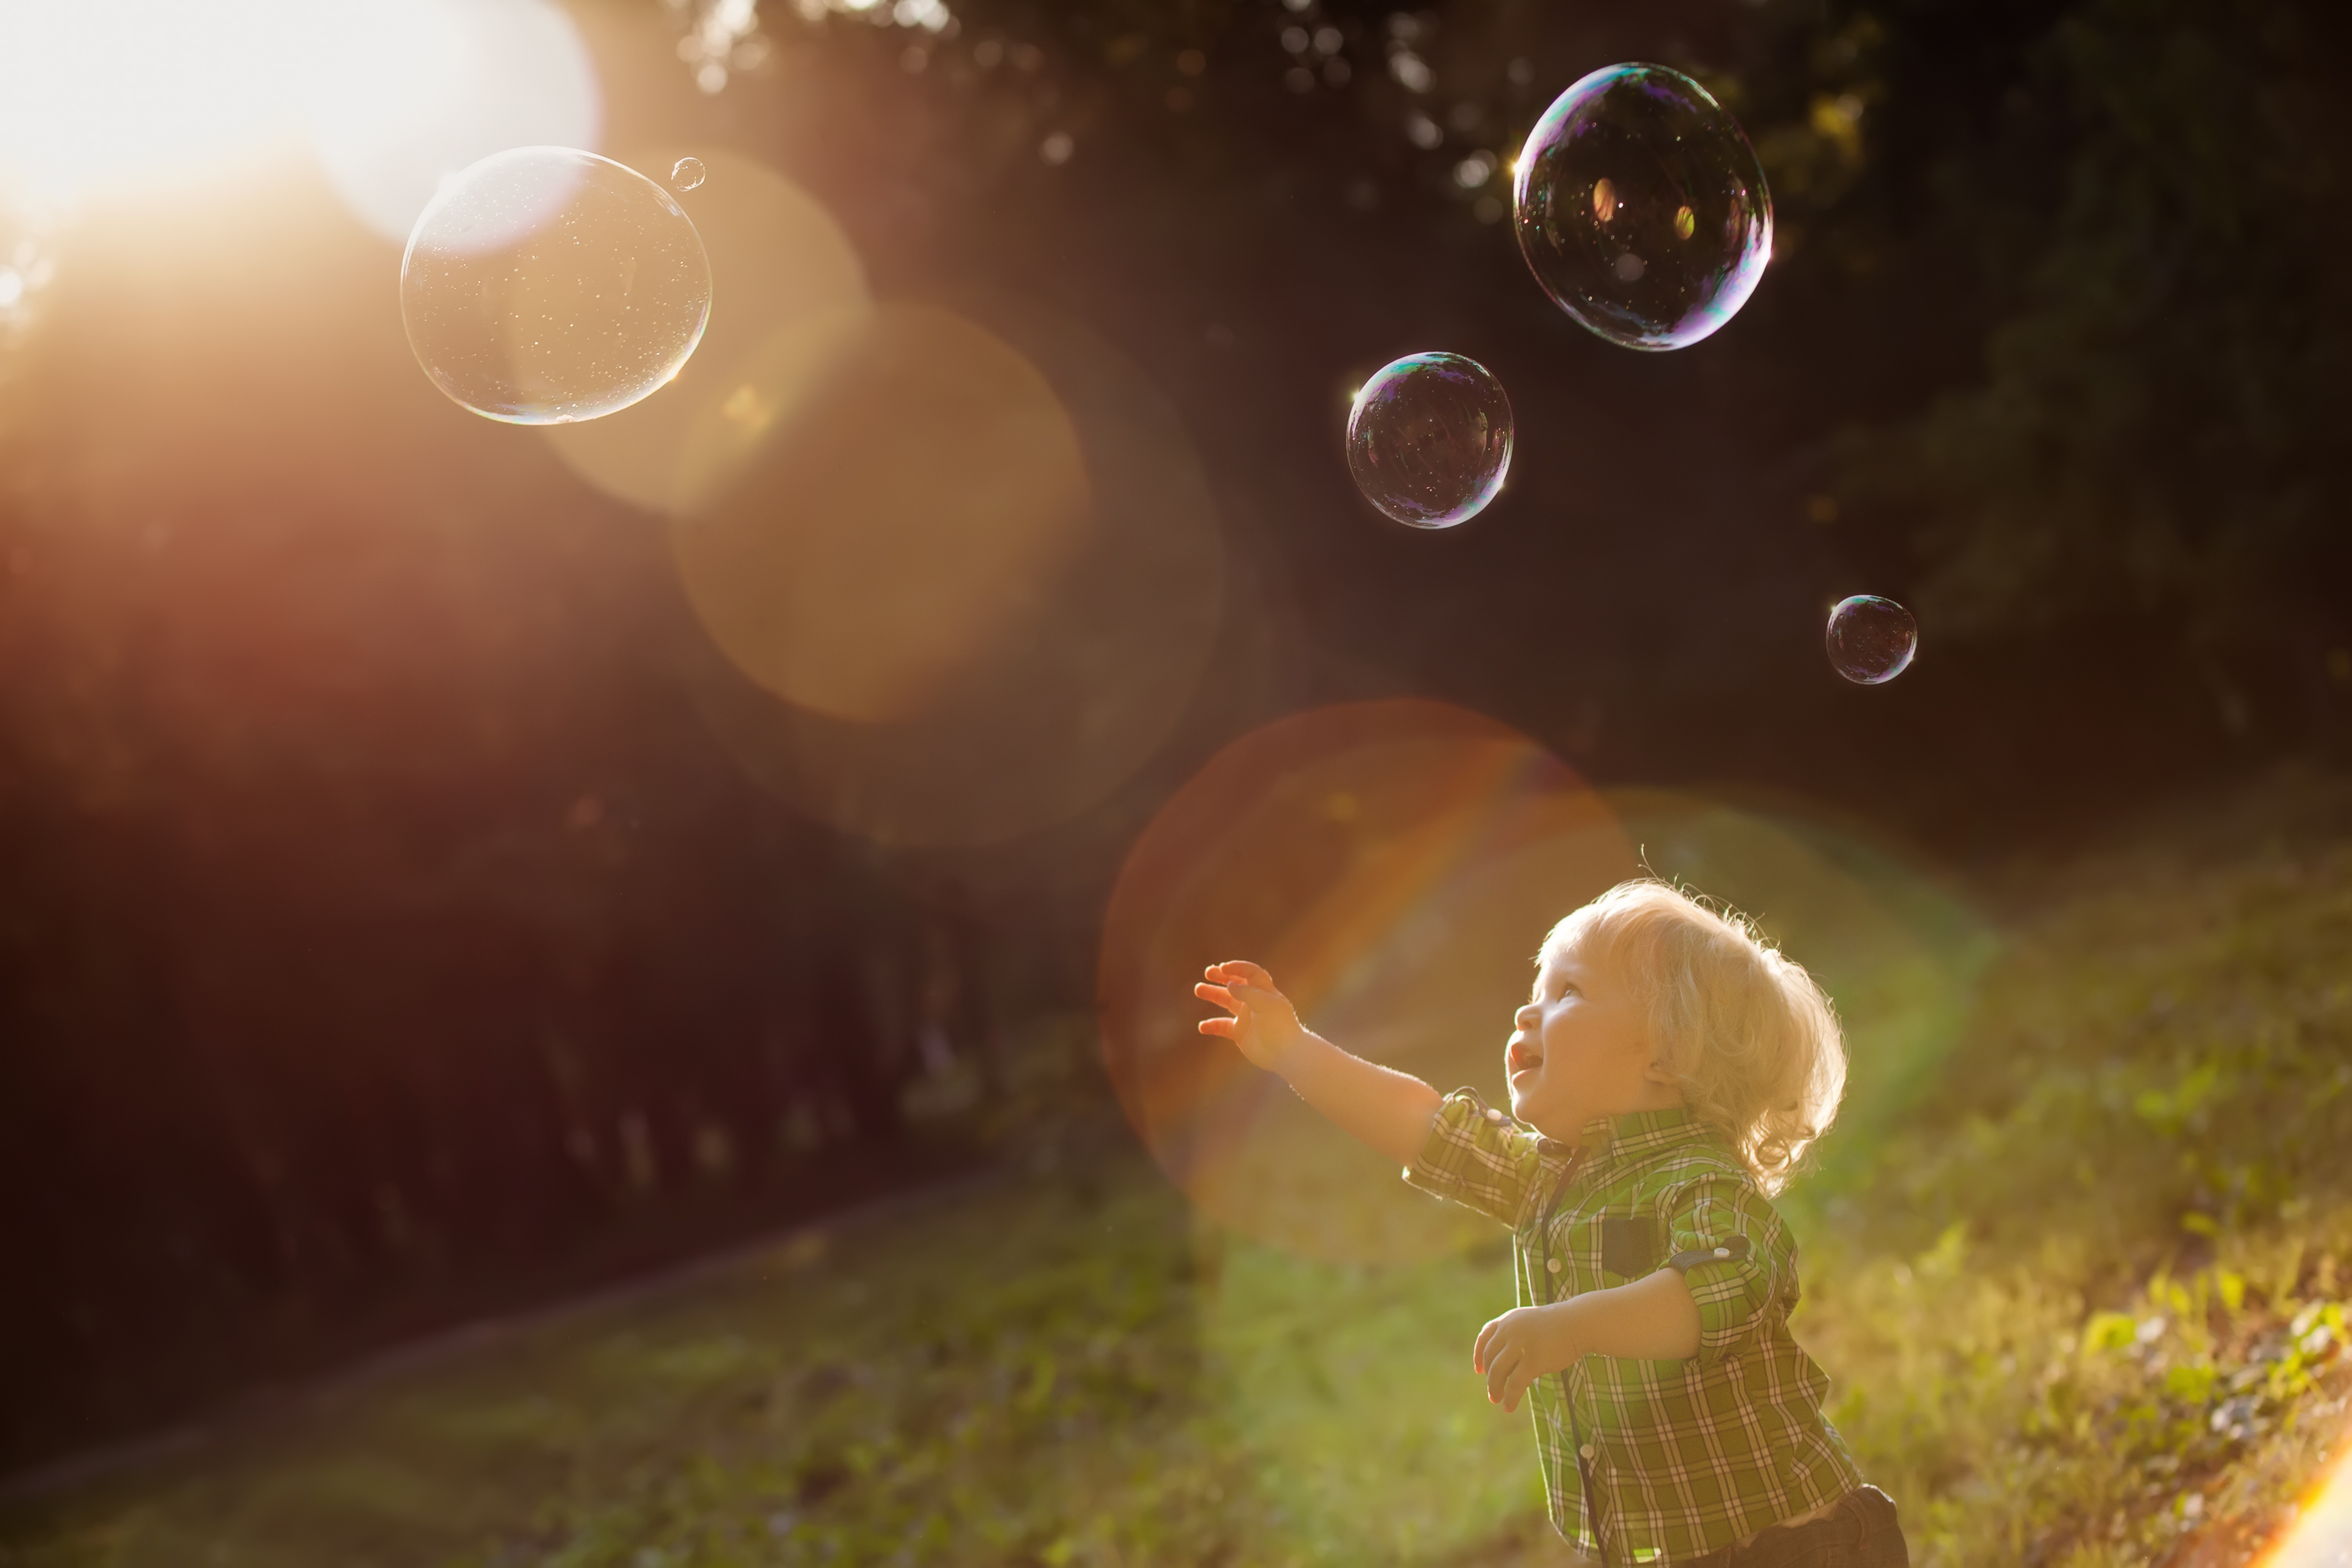 kite-boy-chasing-bubbles-at-park